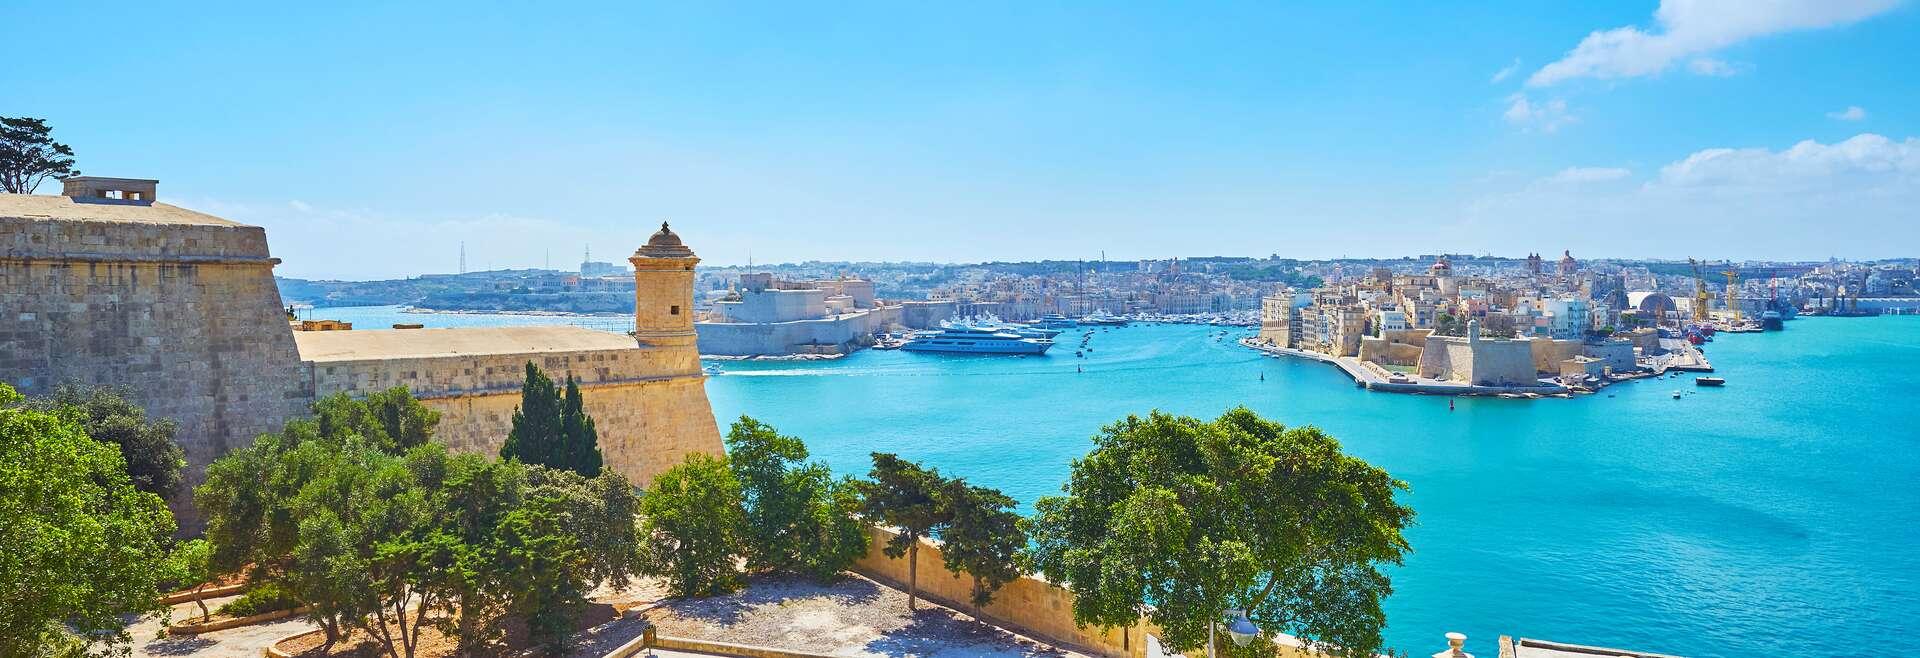 Séjour linguistique Malte, Grand Harbour of Valletta